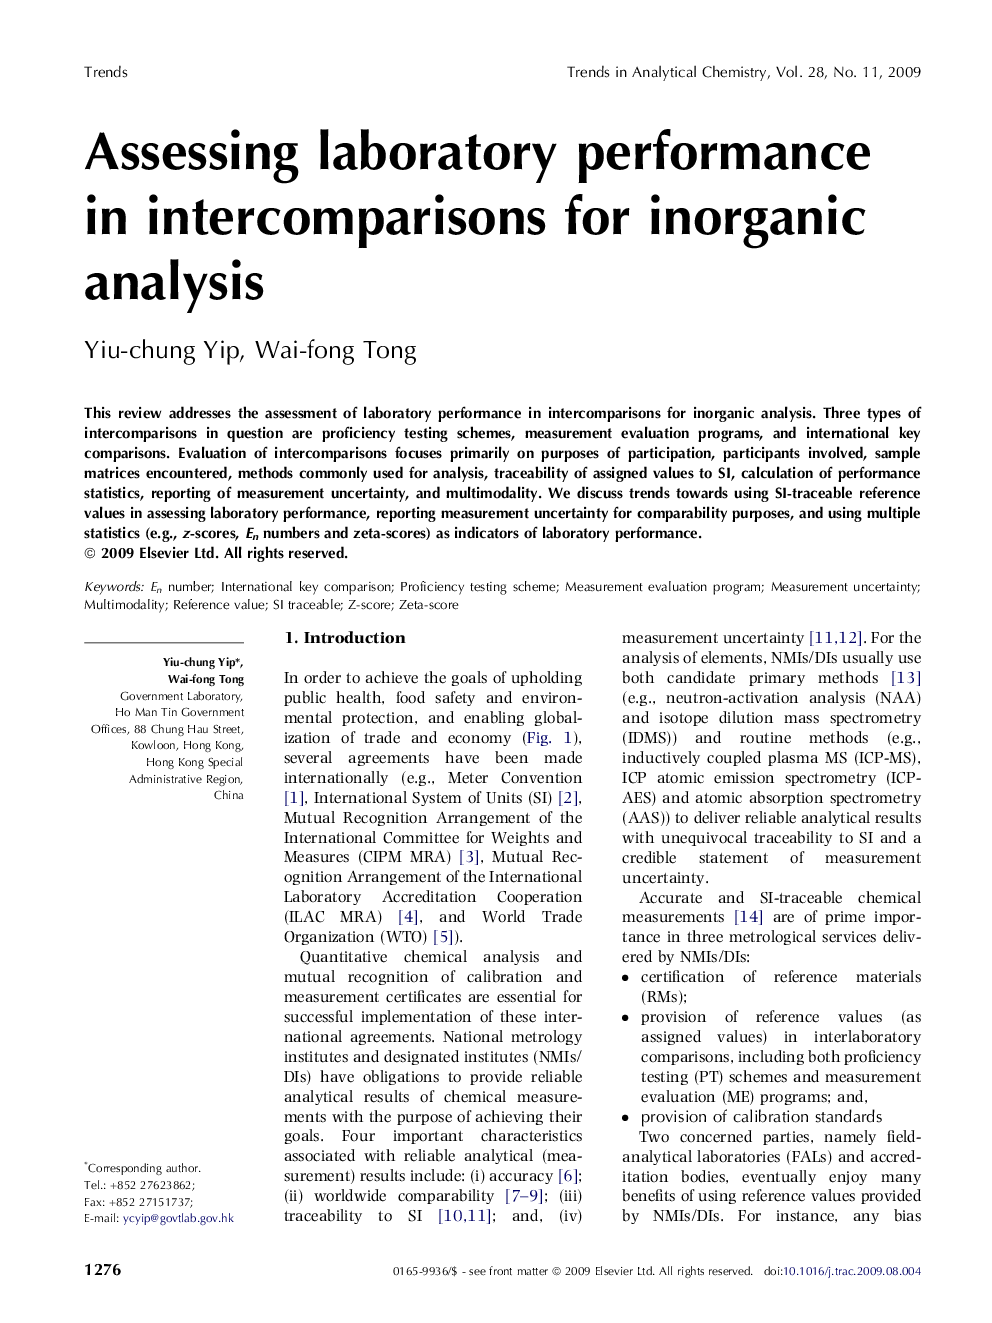 Assessing laboratory performance in intercomparisons for inorganic analysis